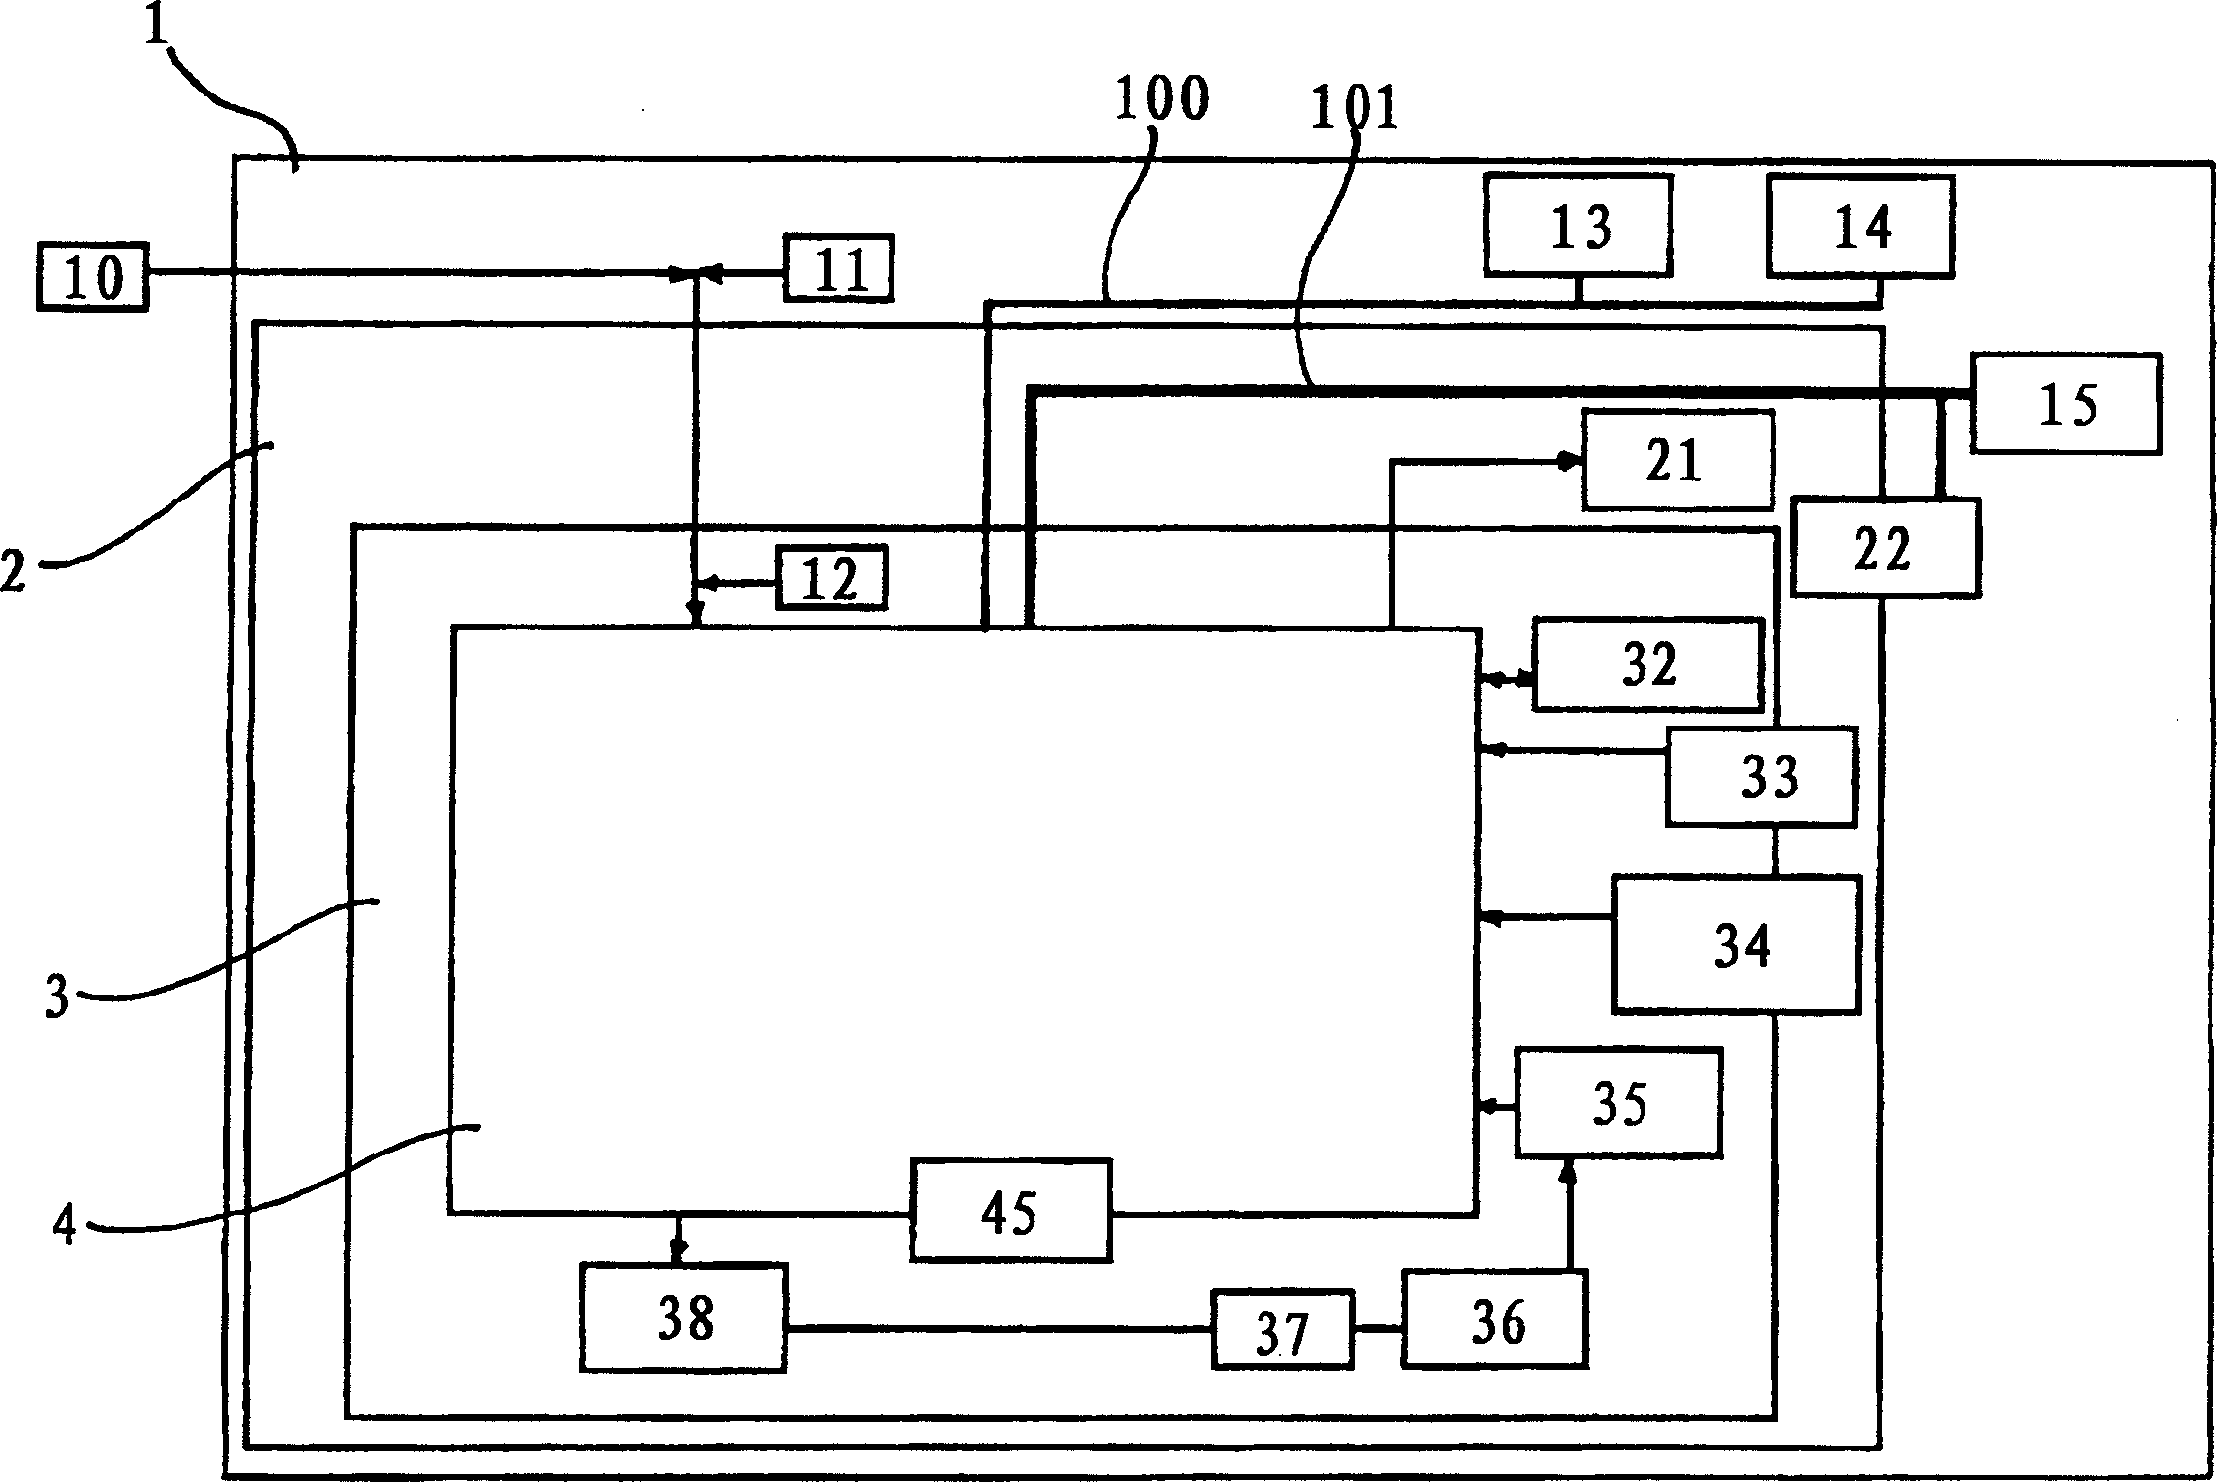 A medium voltage integrated switchgear